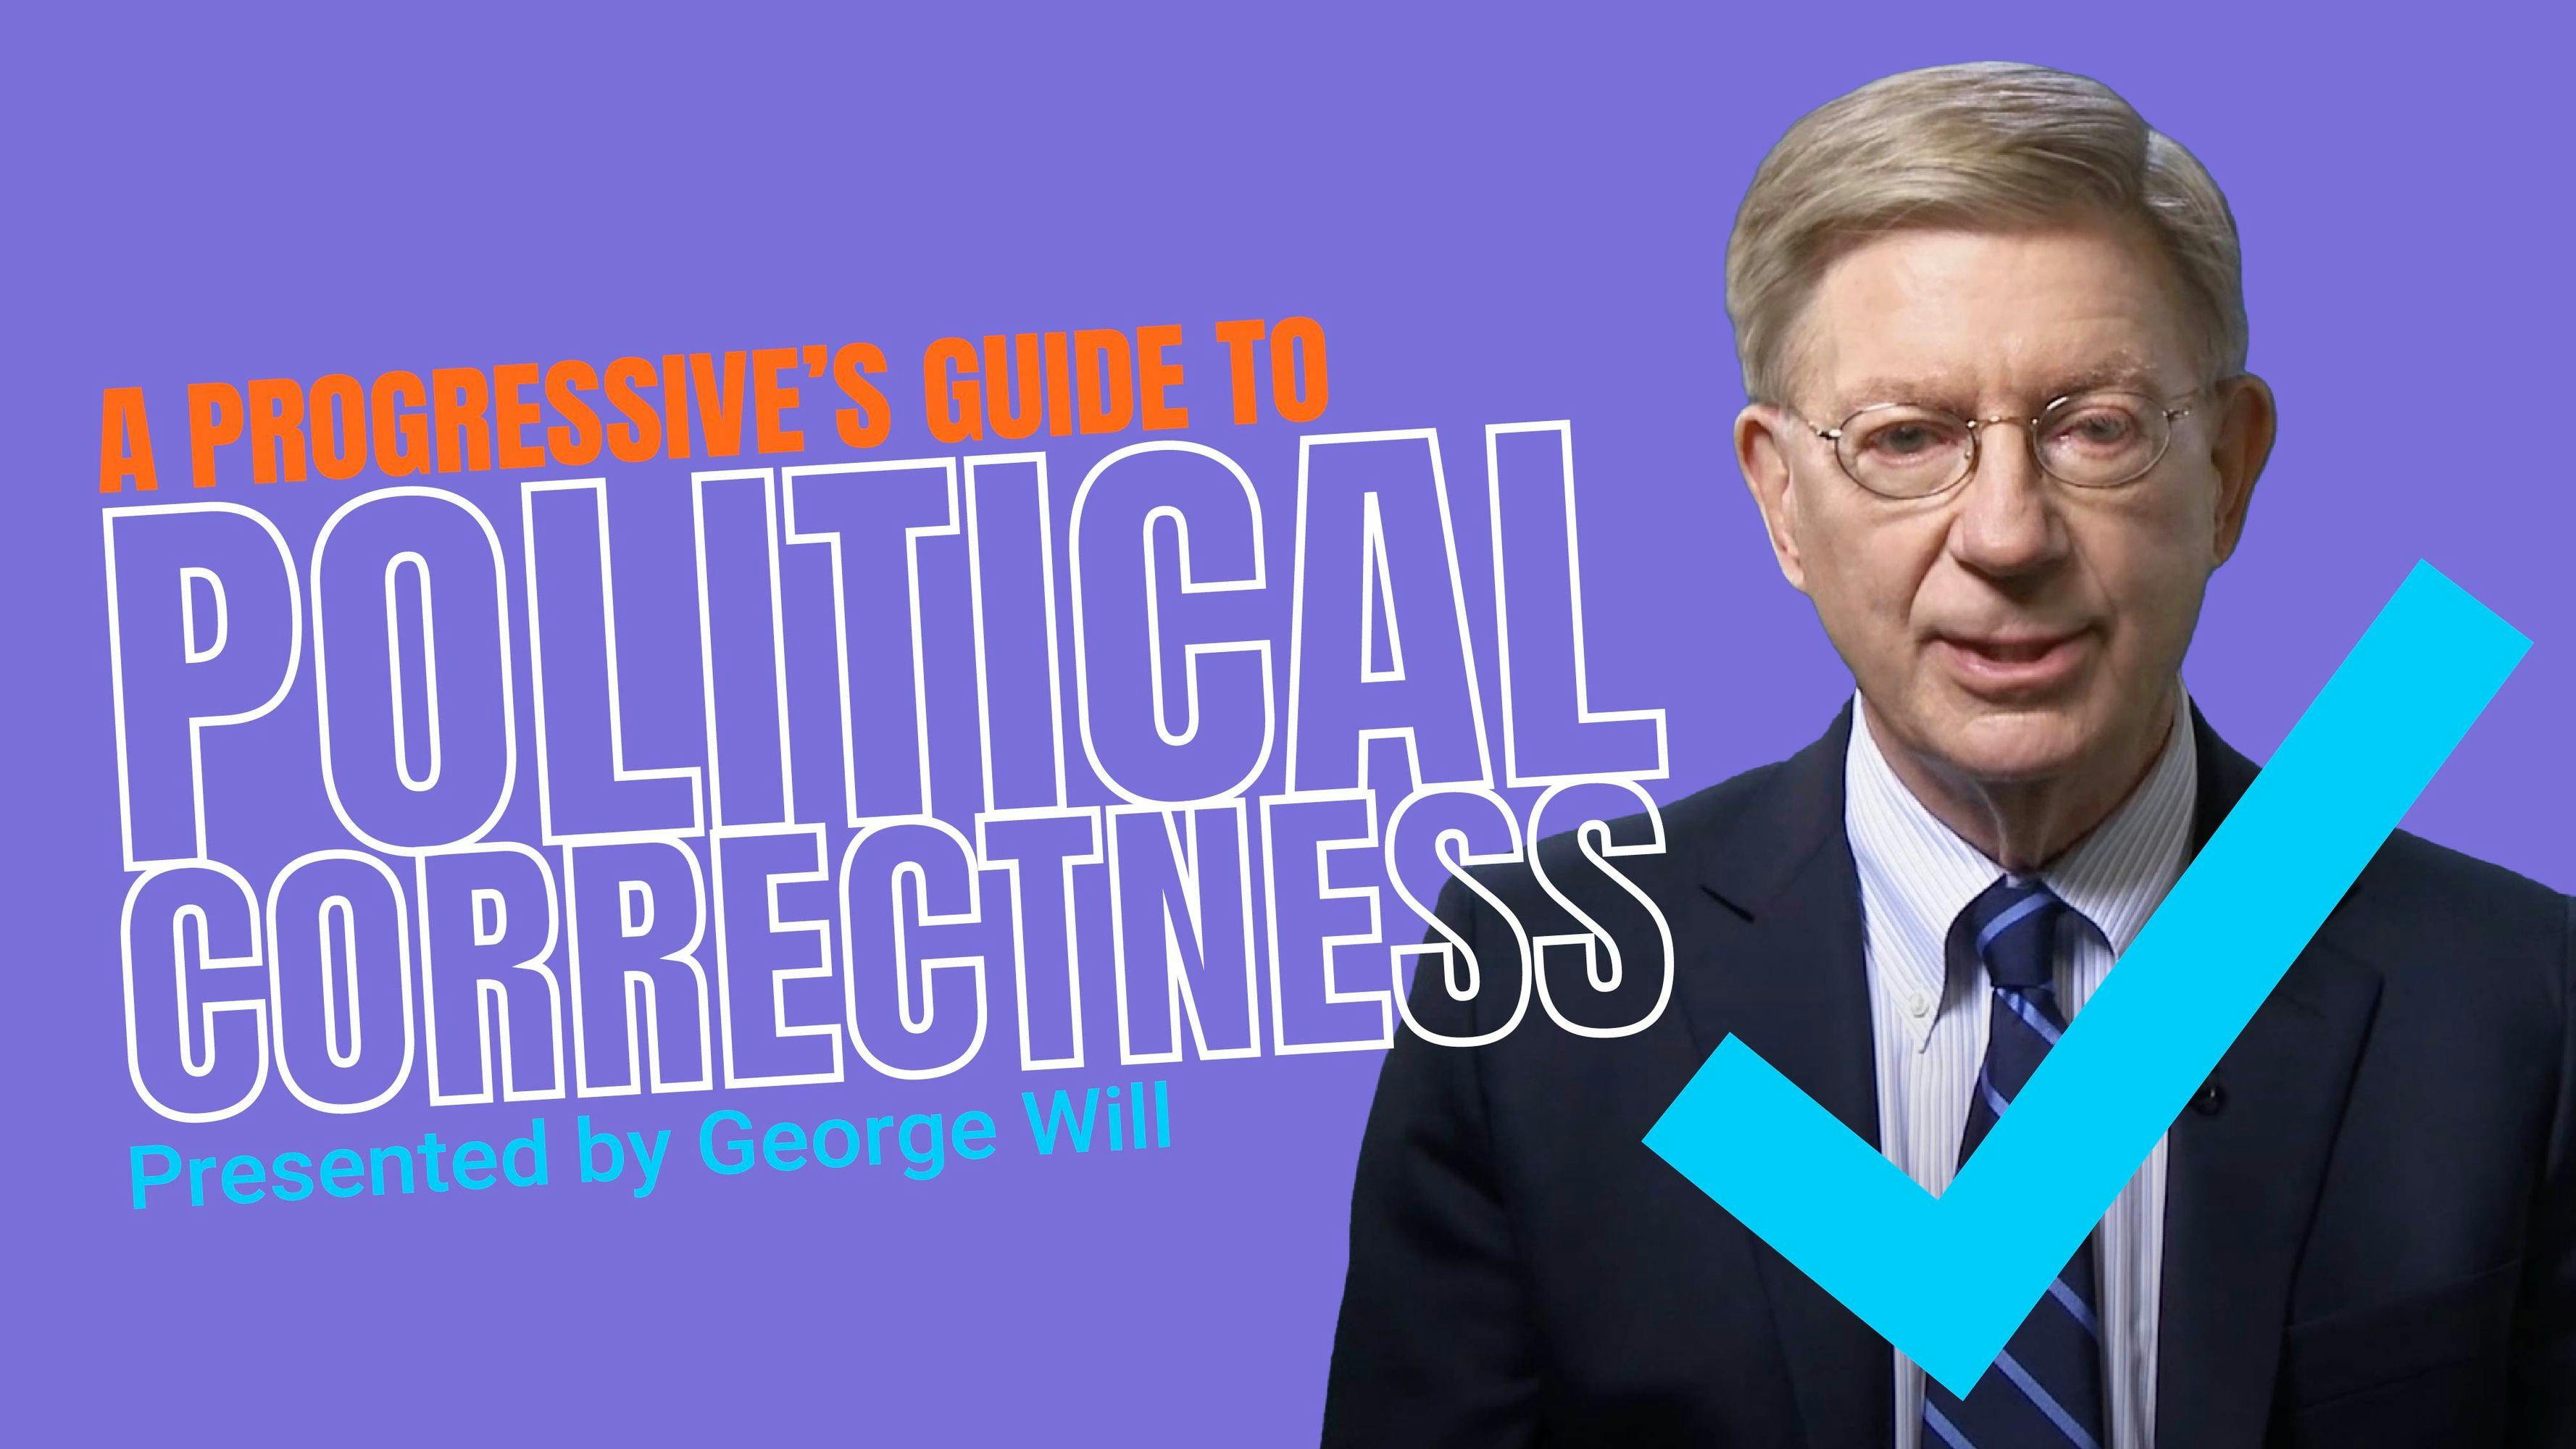 A Progressive's Guide to Political Correctness